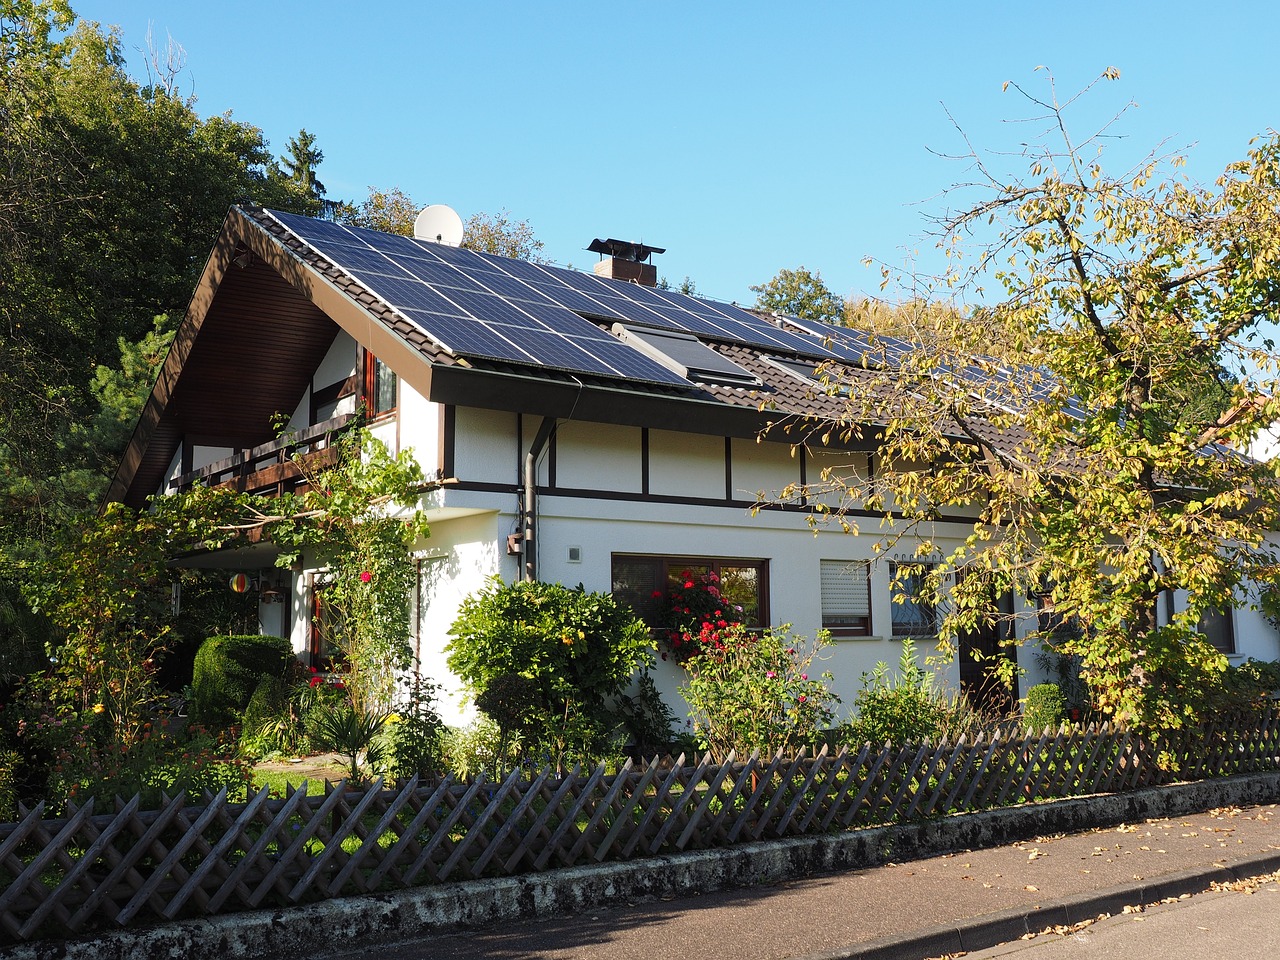 a house with a solar panel on the roof, shutterstock, detmold, iwakura, biedermeier, 3 4 5 3 1